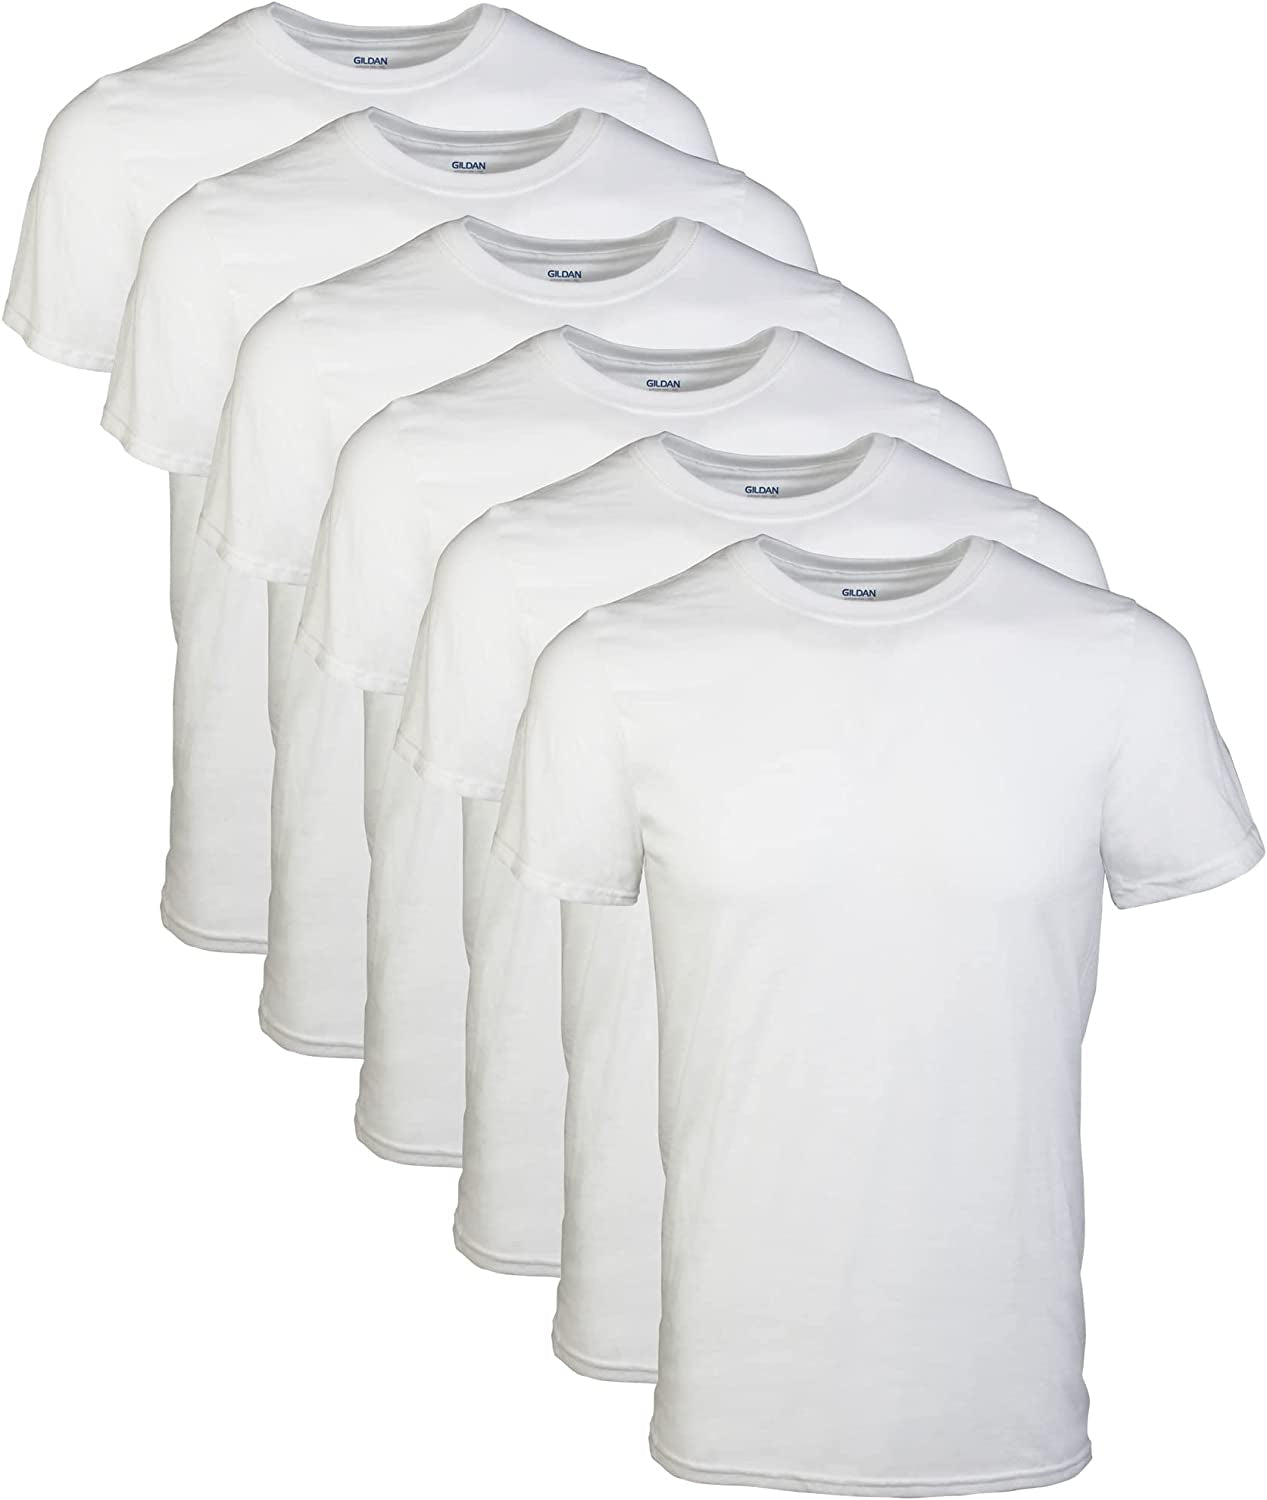  Multipack Men's Crew T-Shirts